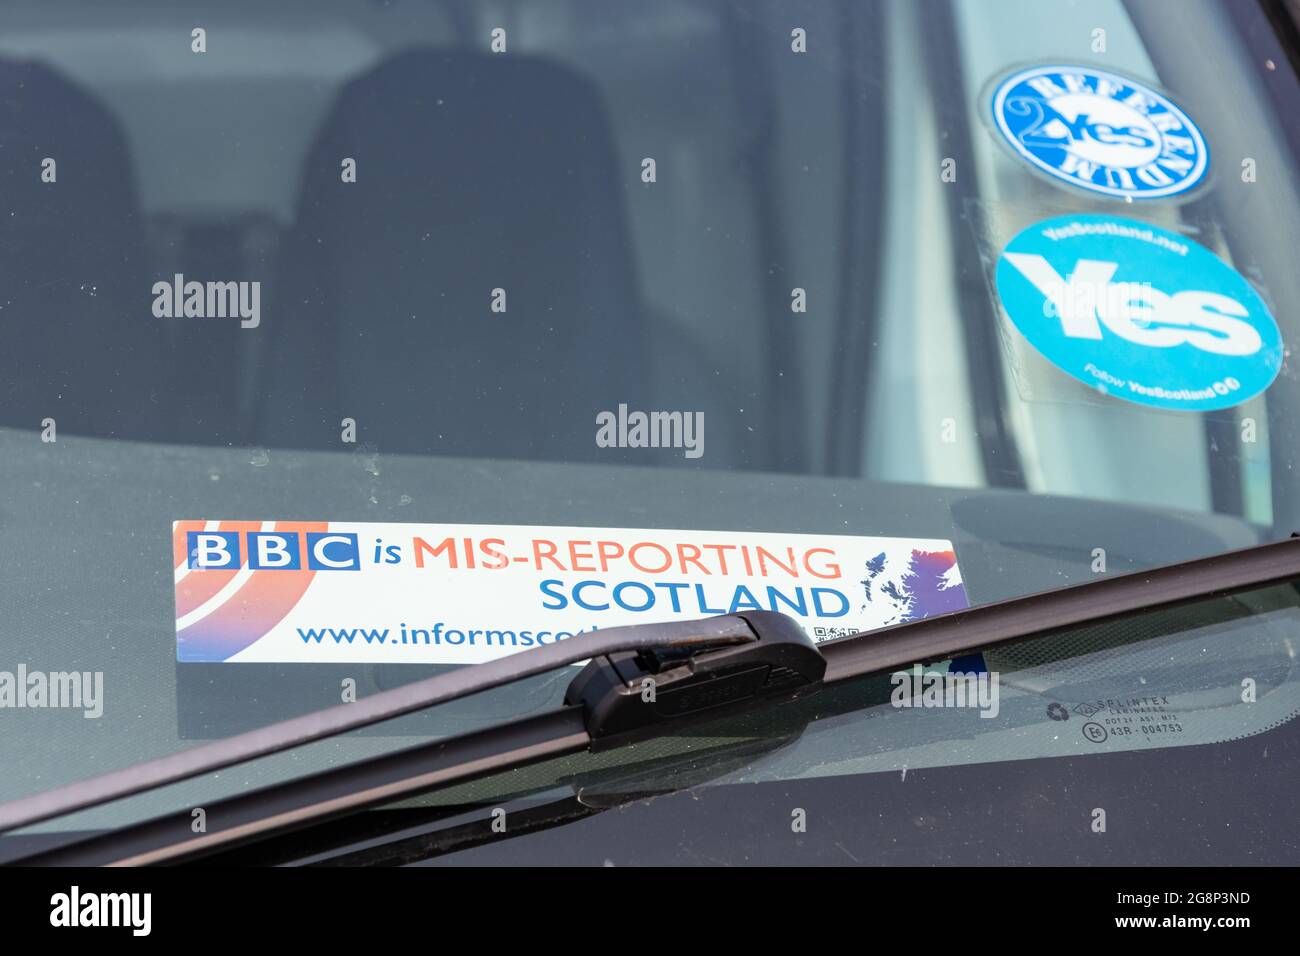 Inform Scotland 'BBC is Mis-reporting Scotland' sticker in vehicle campaigning against BBC Scotland bias - Scotland, UK Stock Photo